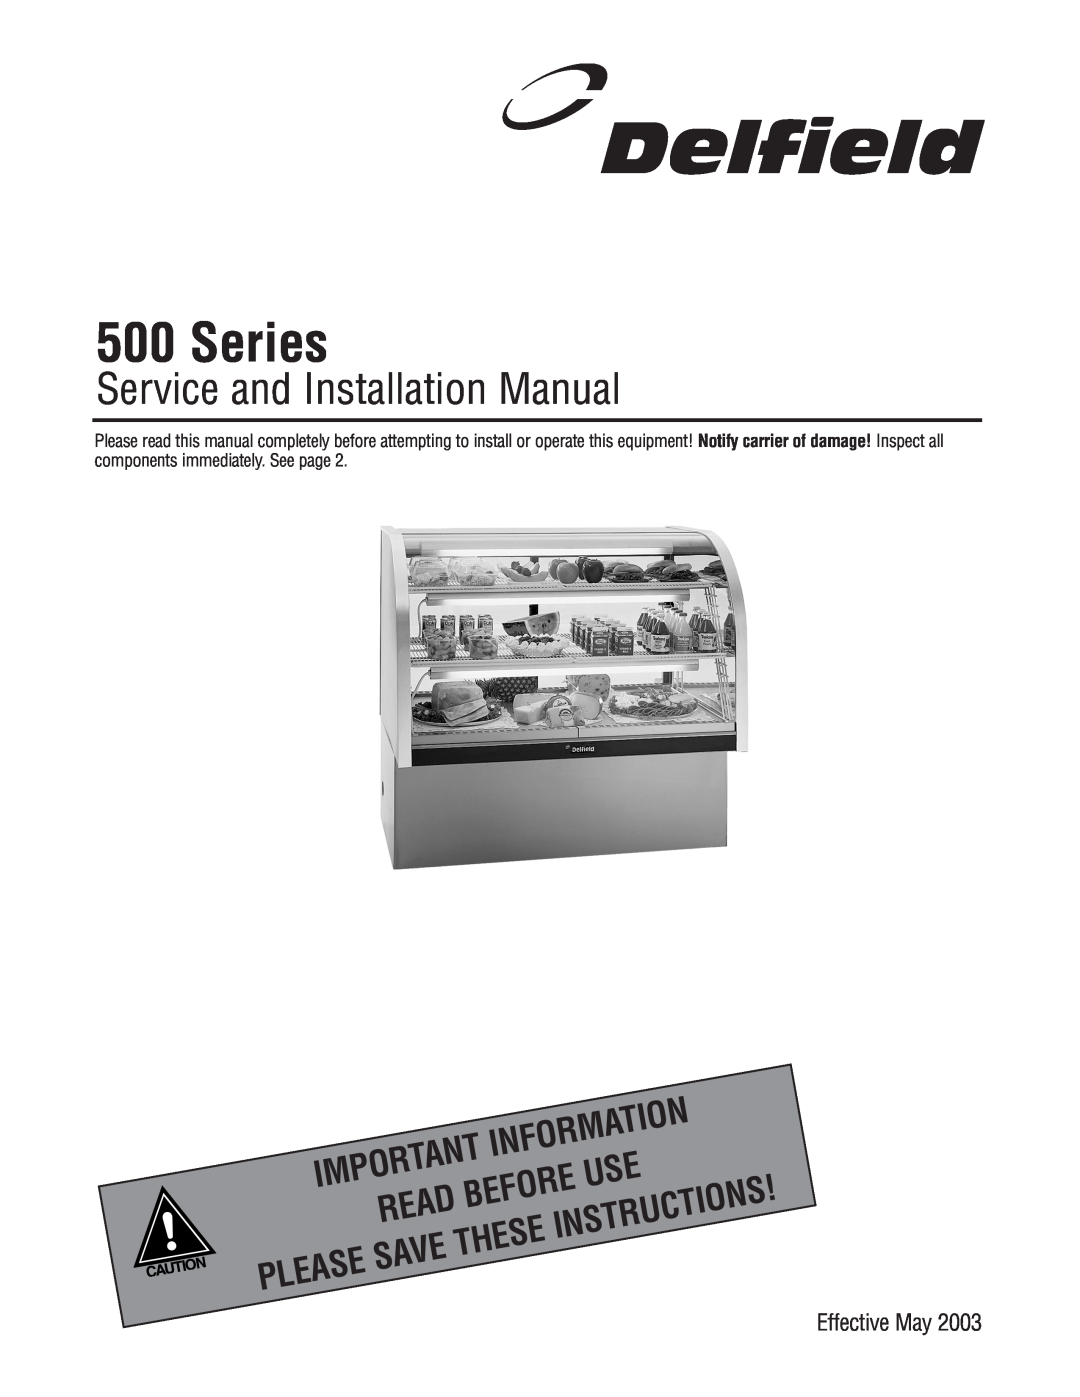 Delfield 500 installation manual Series, Service and Installation Manual, Information, Read, Save, Before, Instructions 